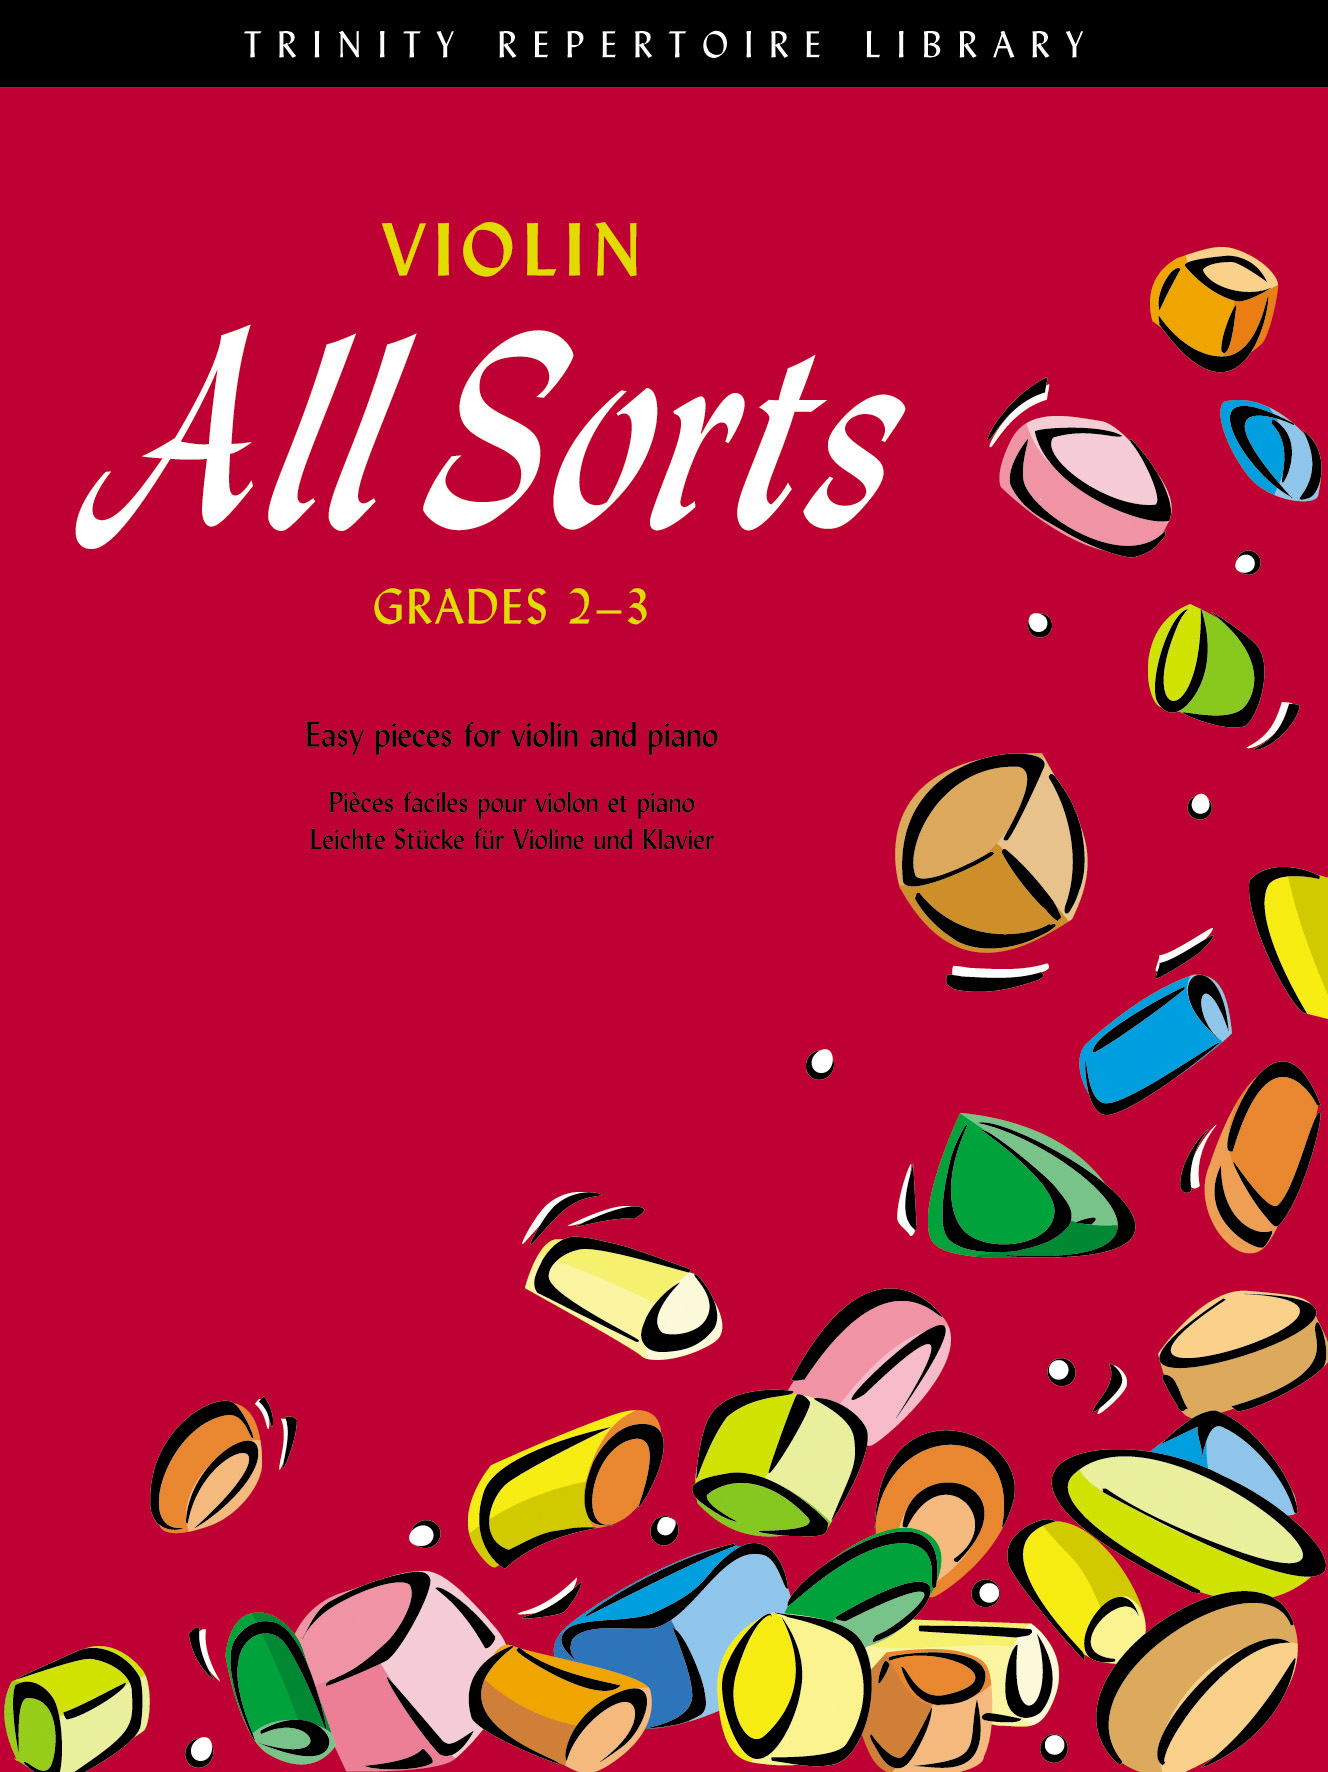 Violin All Sorts Cohen Grades 2-3 Sheet Music Songbook